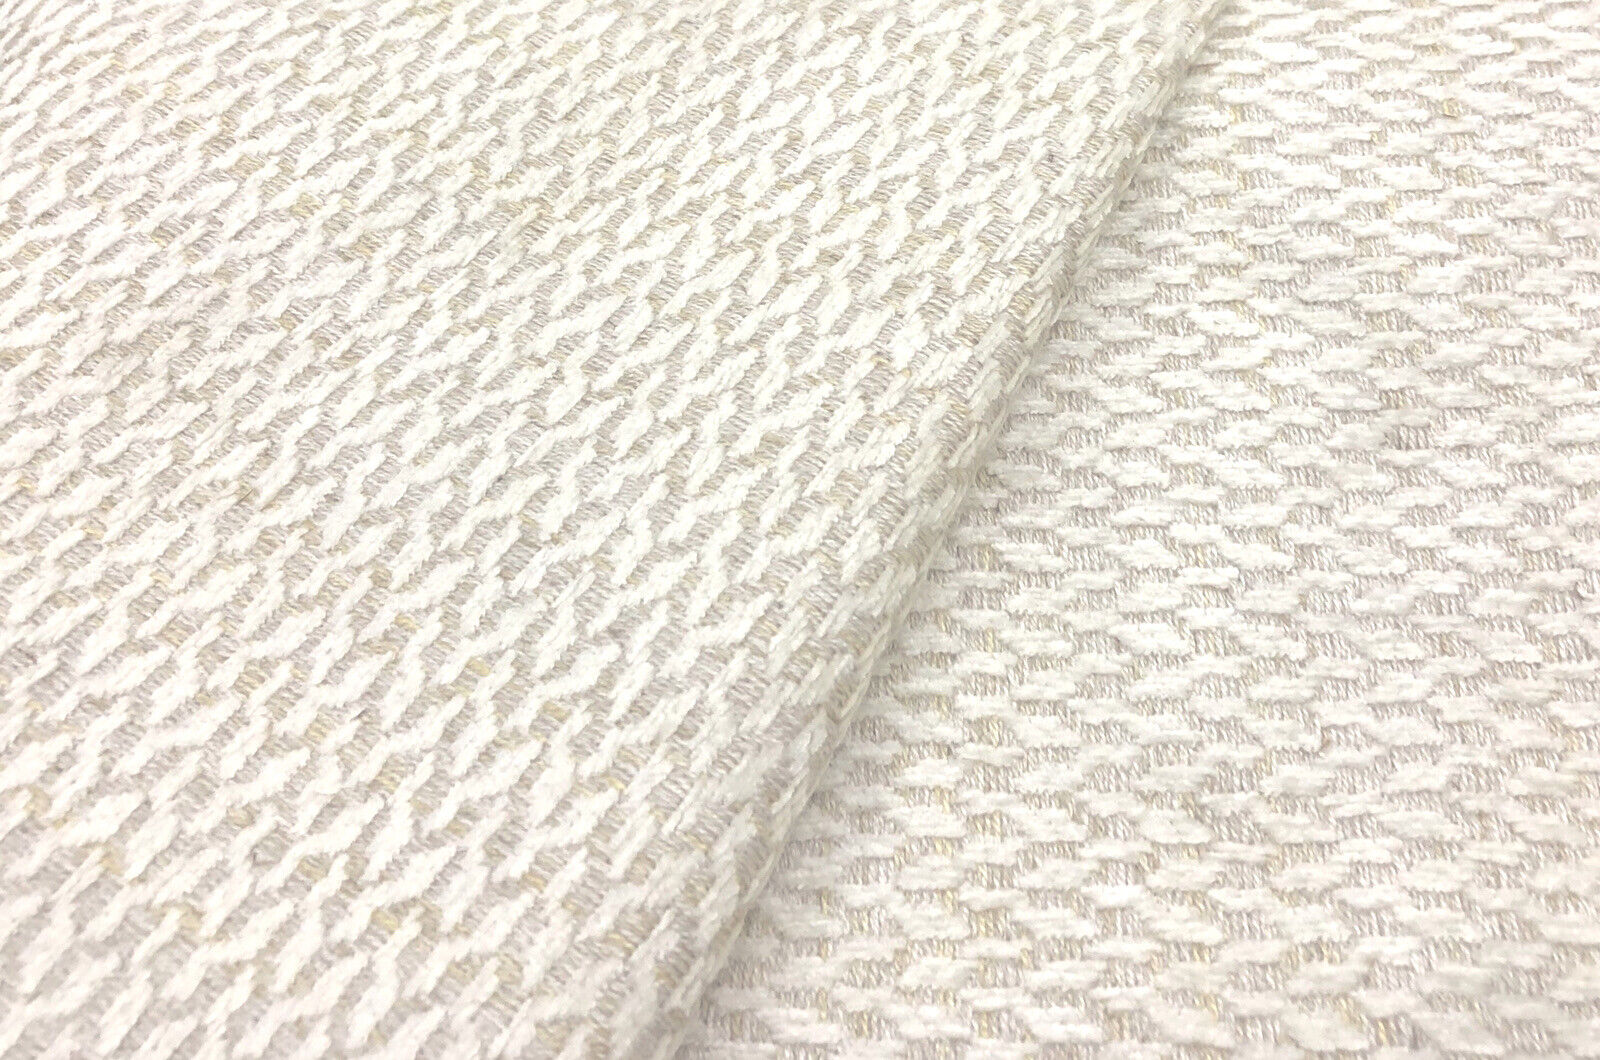 Scalamandre Small Scale Uphol Fabric Cortona Chenille Alabaster 4.5 yd 27104-001